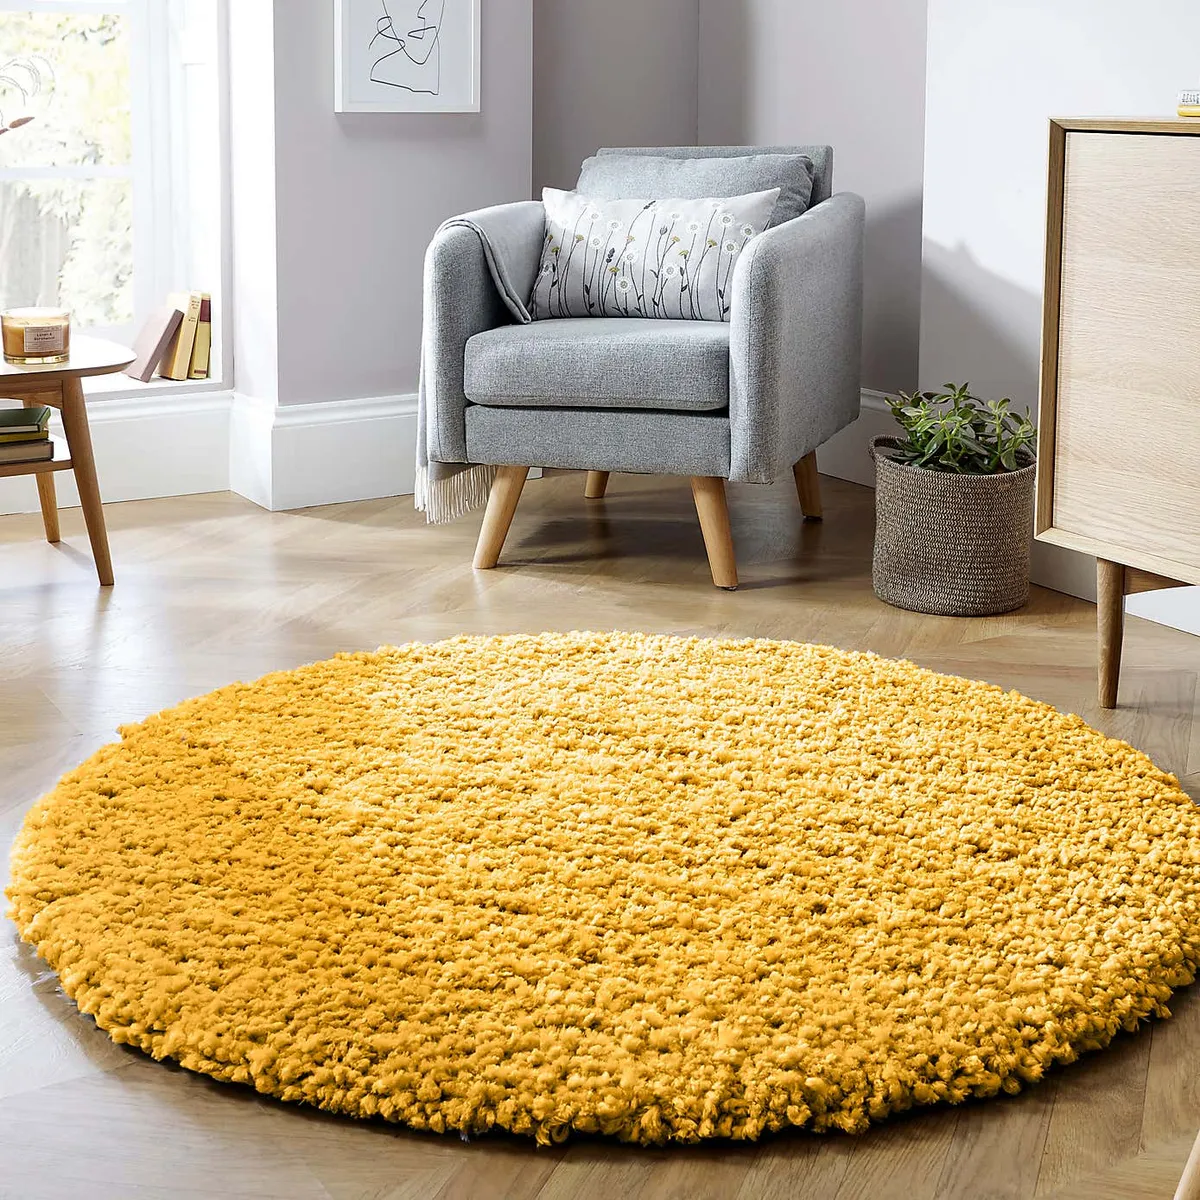 Bertie shaggy circle rug